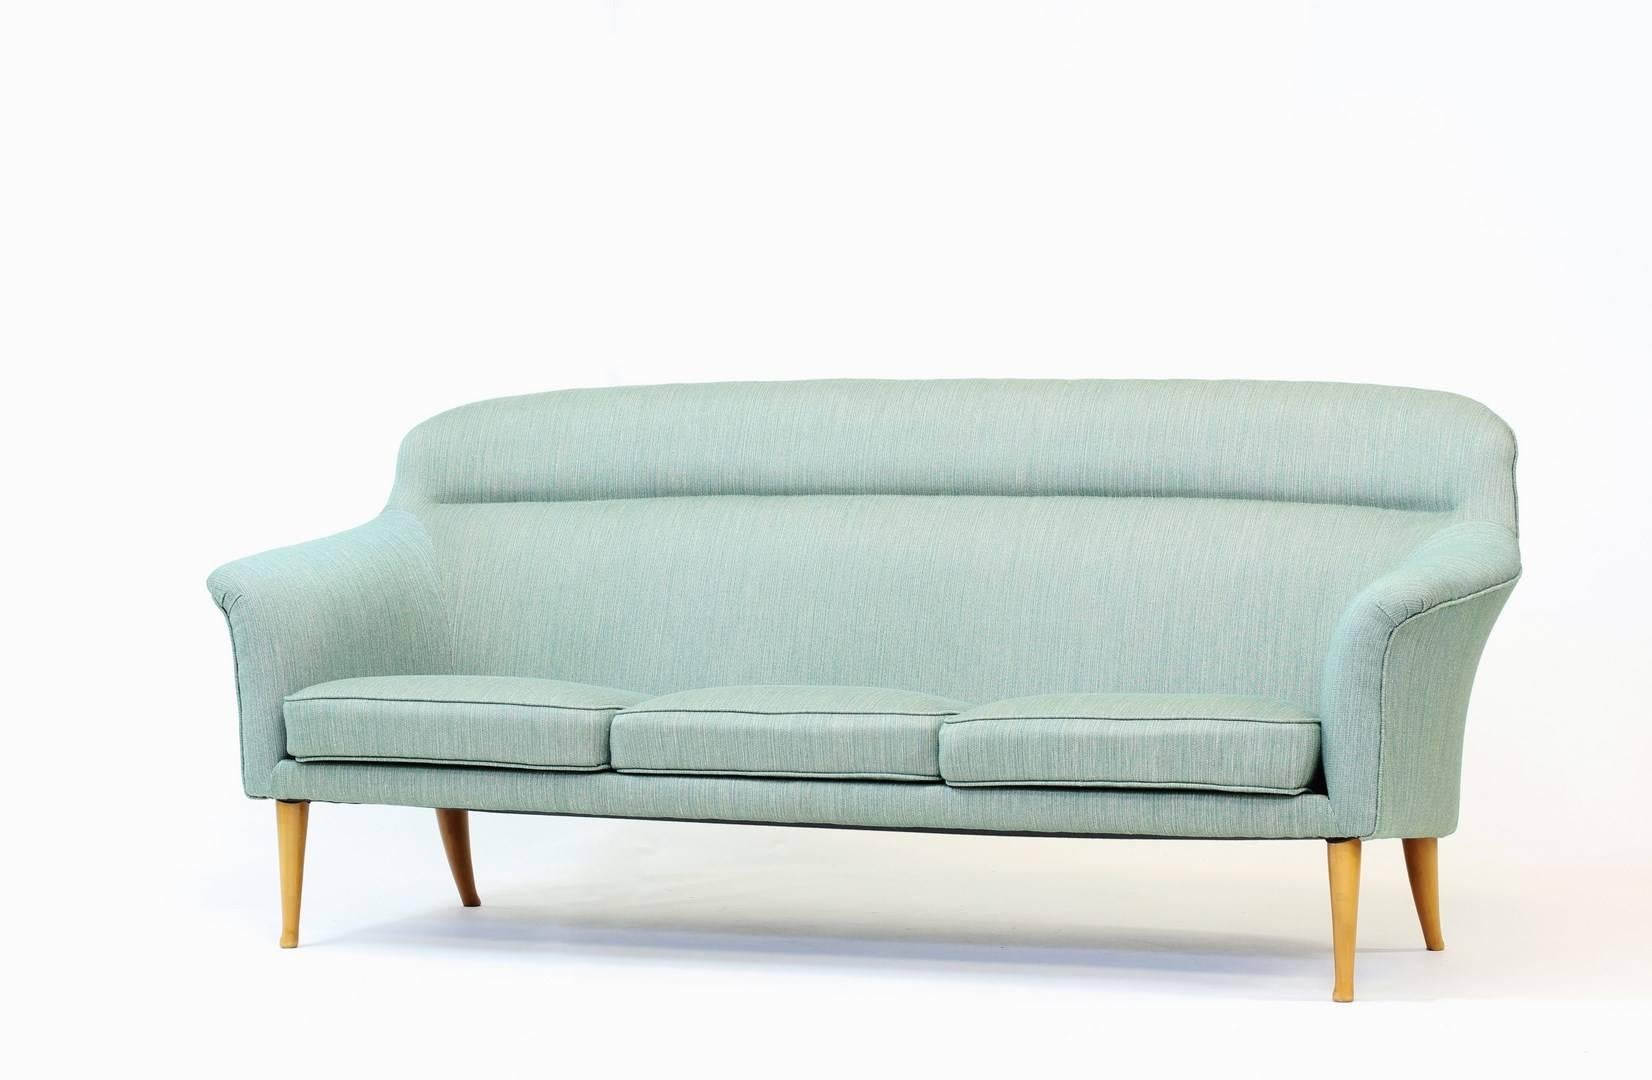 Extremely rare three-seat “Stora Familjen” (“Big Family”) sofa by Kerstin Hörlin-Holmquist for NK (Nordiska Kompaniet). Beech legs and original linen upholstery in very good condition.